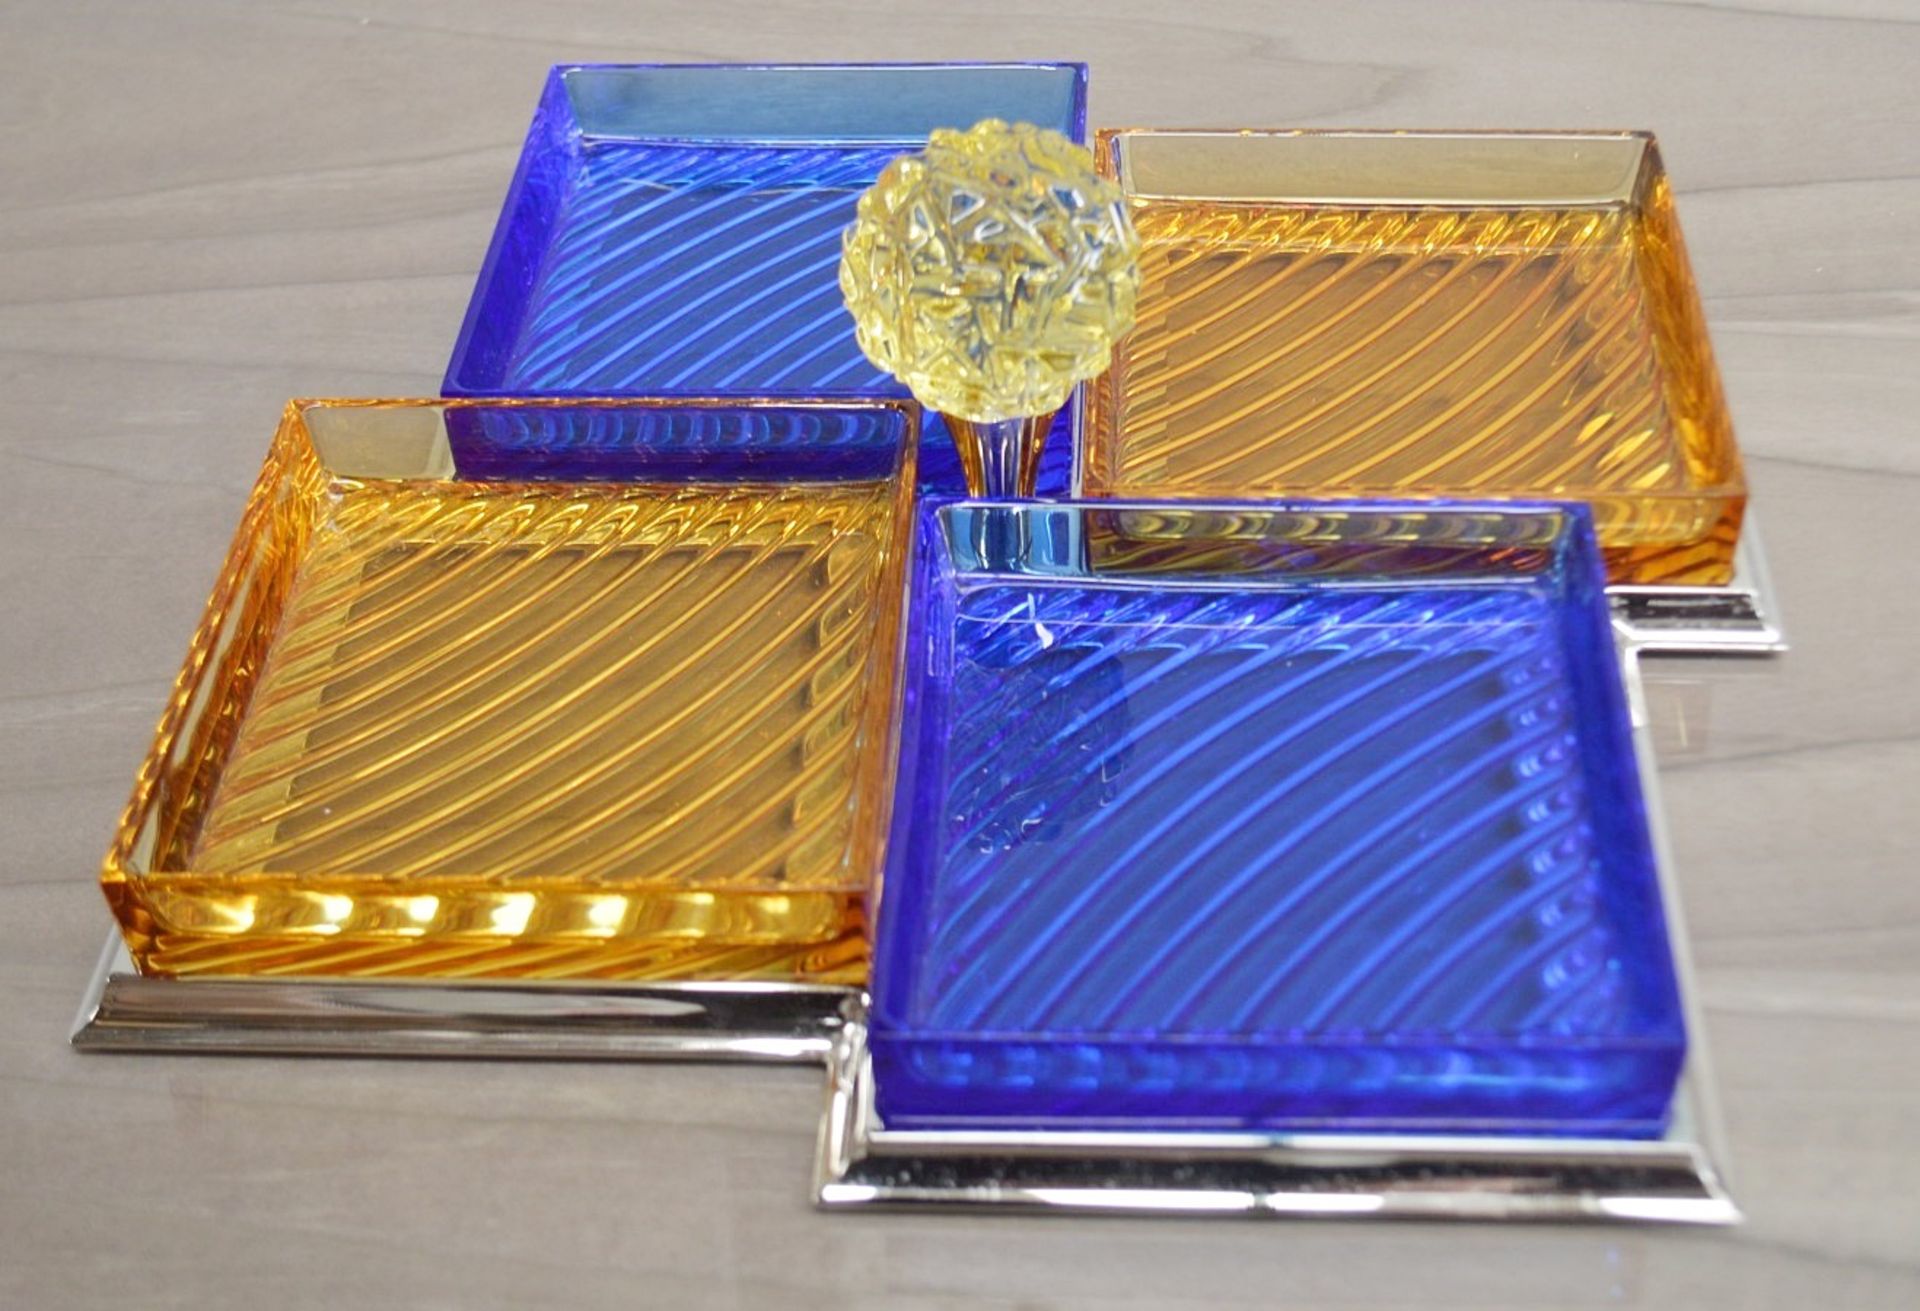 1 x BALDI 'Home Jewels' Italian Hand-crafted Artisan Glass Serving Dish - Original RRP £2.665.00